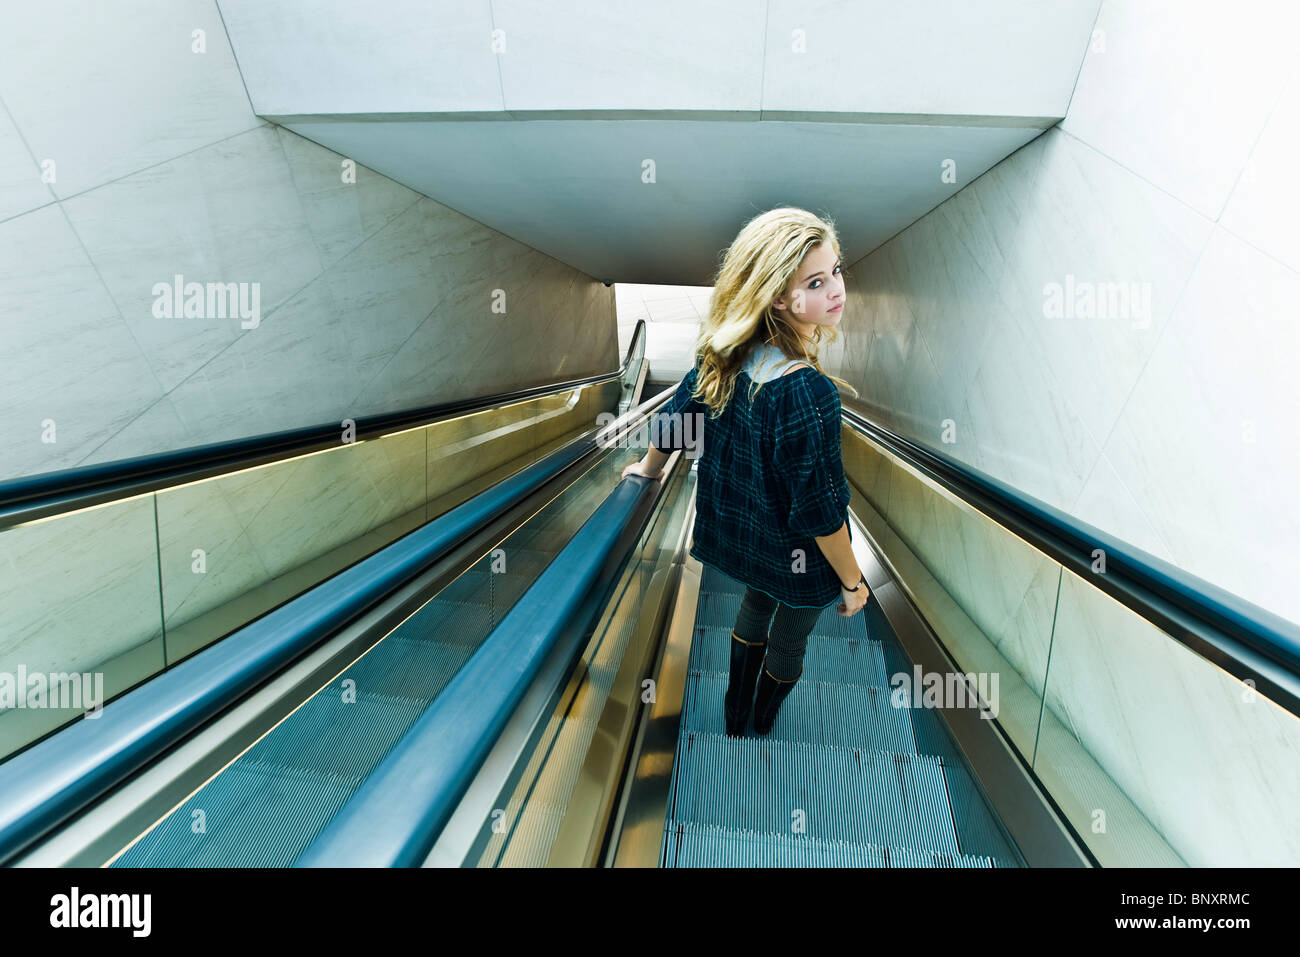 Teen girl riding escalator, looking over shoulder at camera Stock Photo